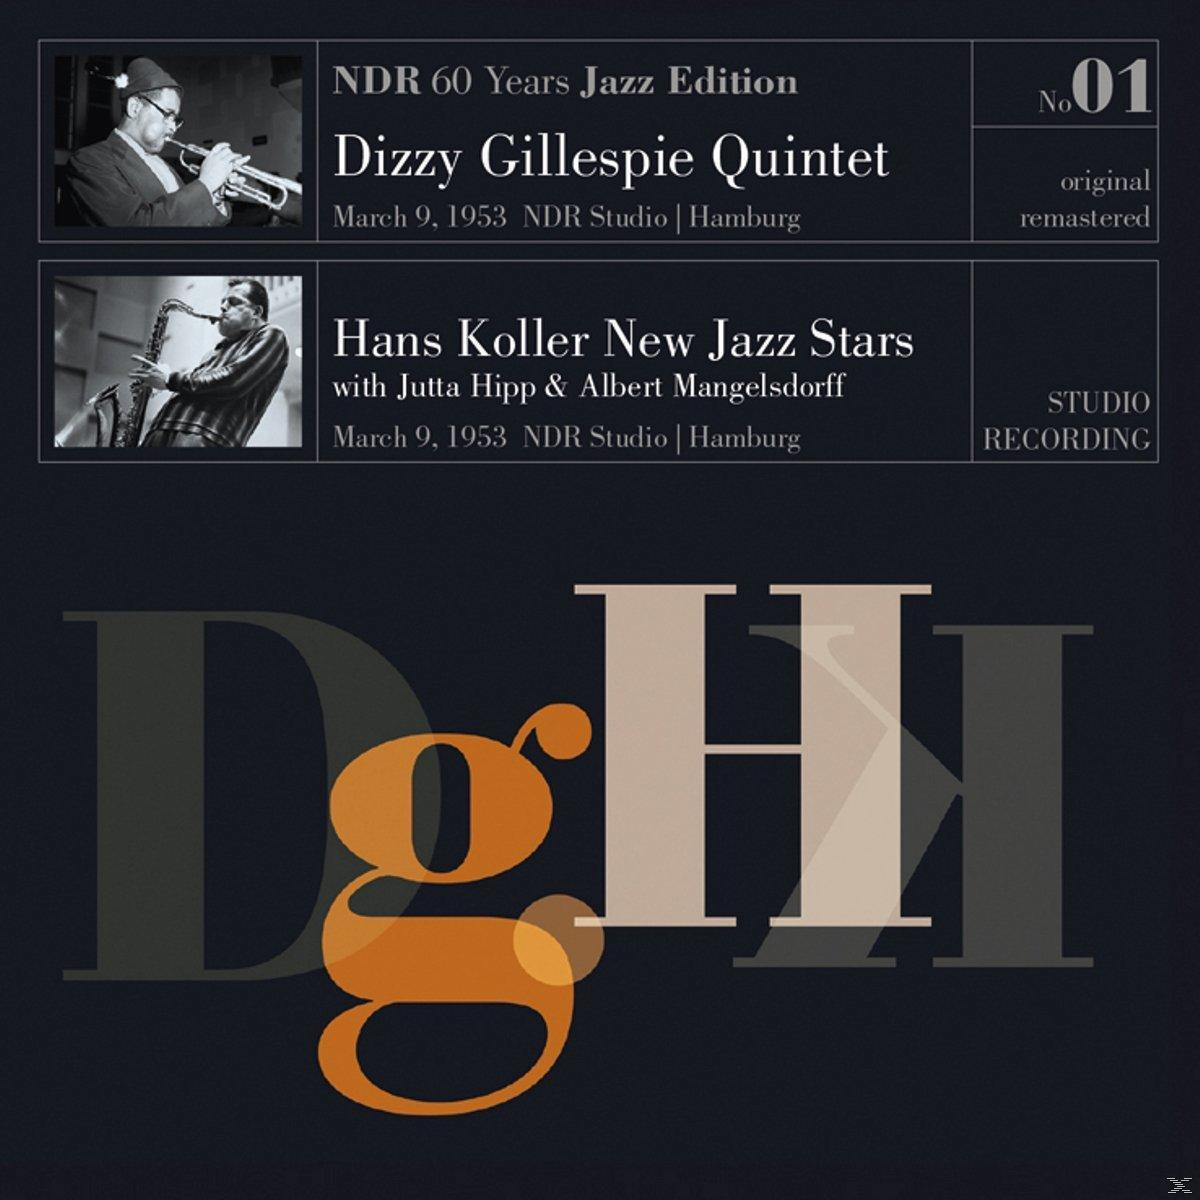 Jutta Hipp, Dizzy Ndr - (Vinyl) Albert Mangelsdorff 60 Jazz Vol.1-Ndr Edition Gillespie, Quintet Koller, Hans Years Jazz - Stars Studio, New Hamburg